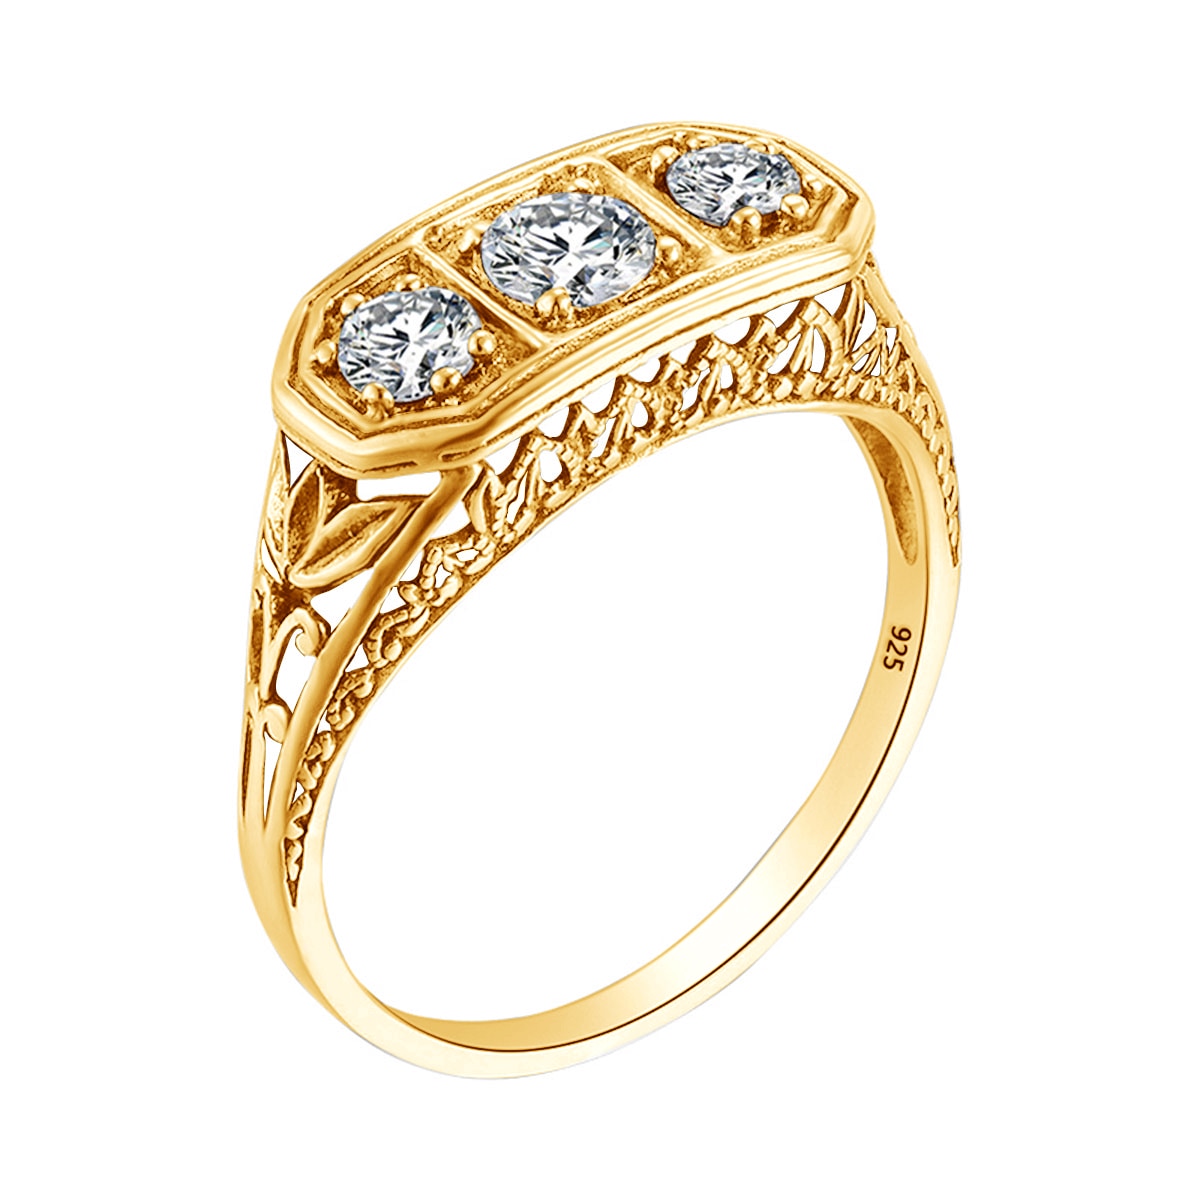 A gold Edwardian style vintage filigree 3 stone ring.